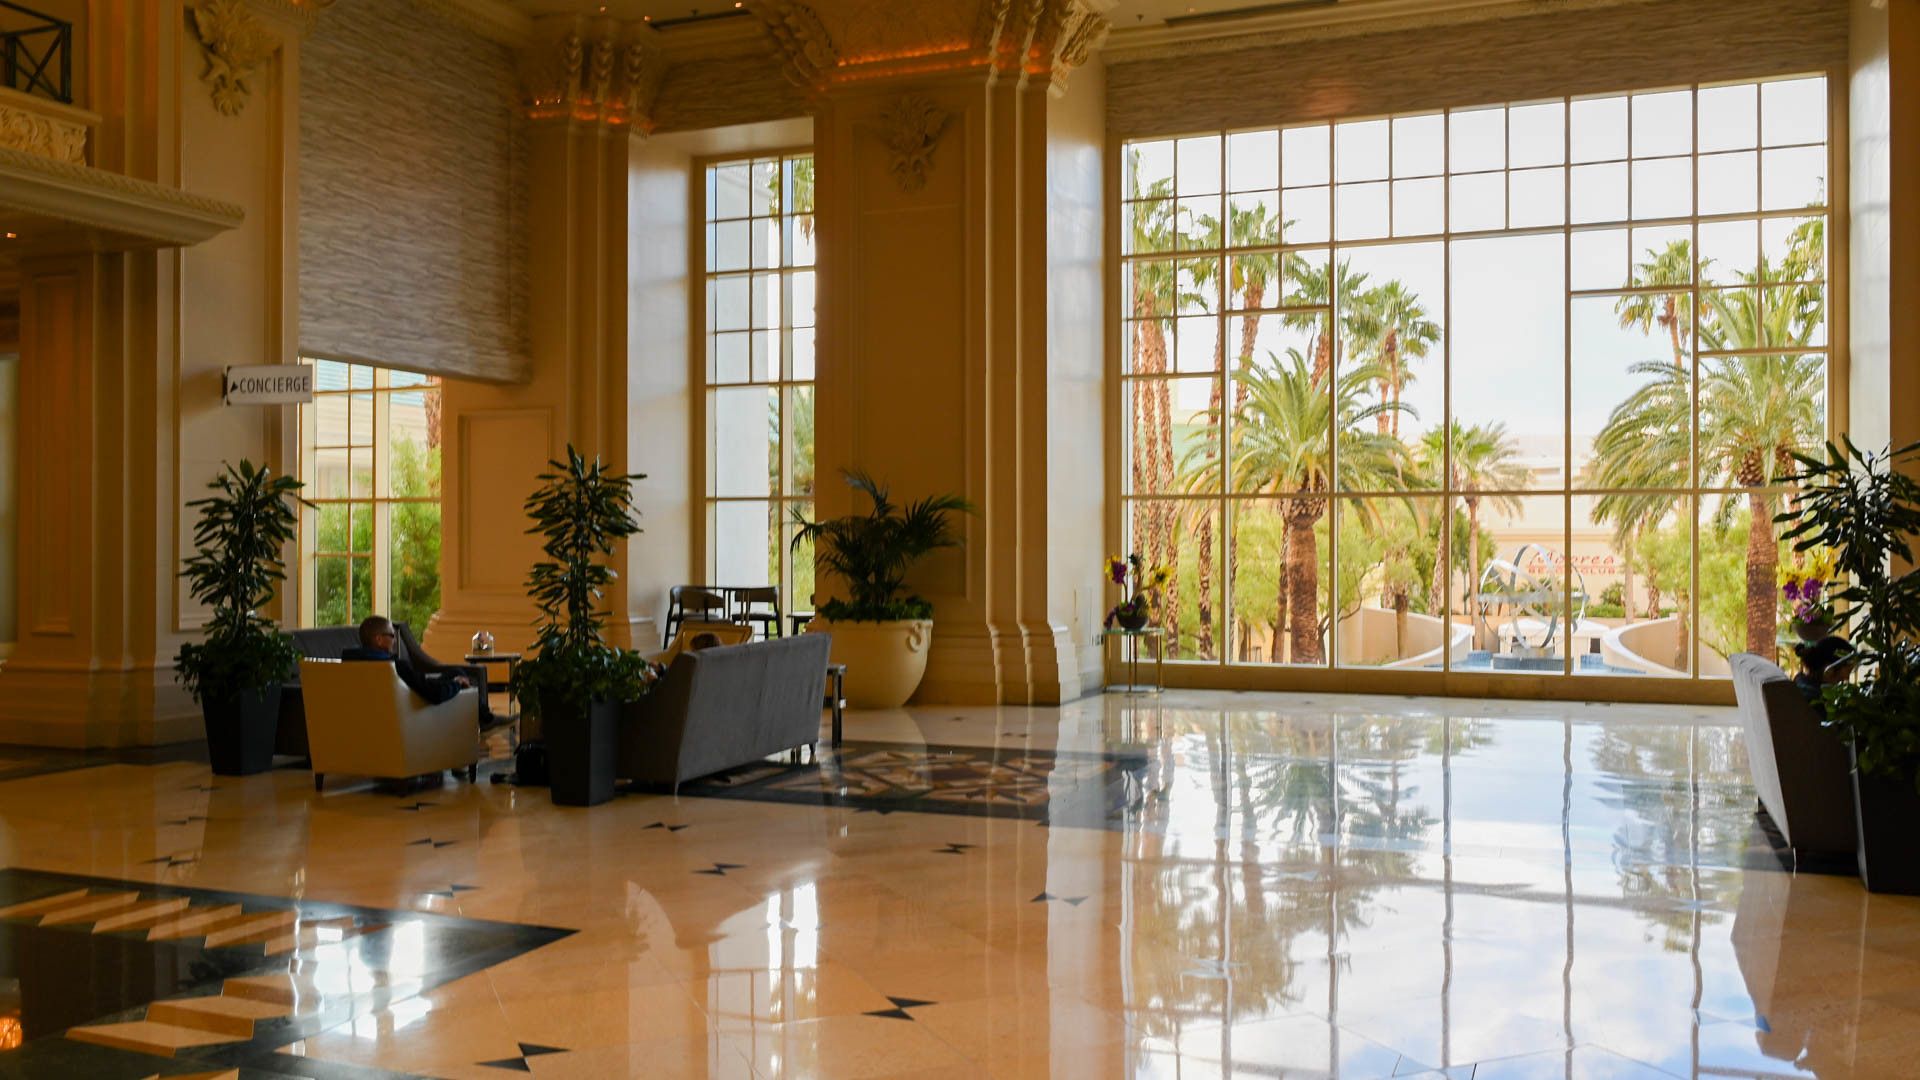 O lobby do hotel Mandalay Bay em Las Vegas, Nevada.